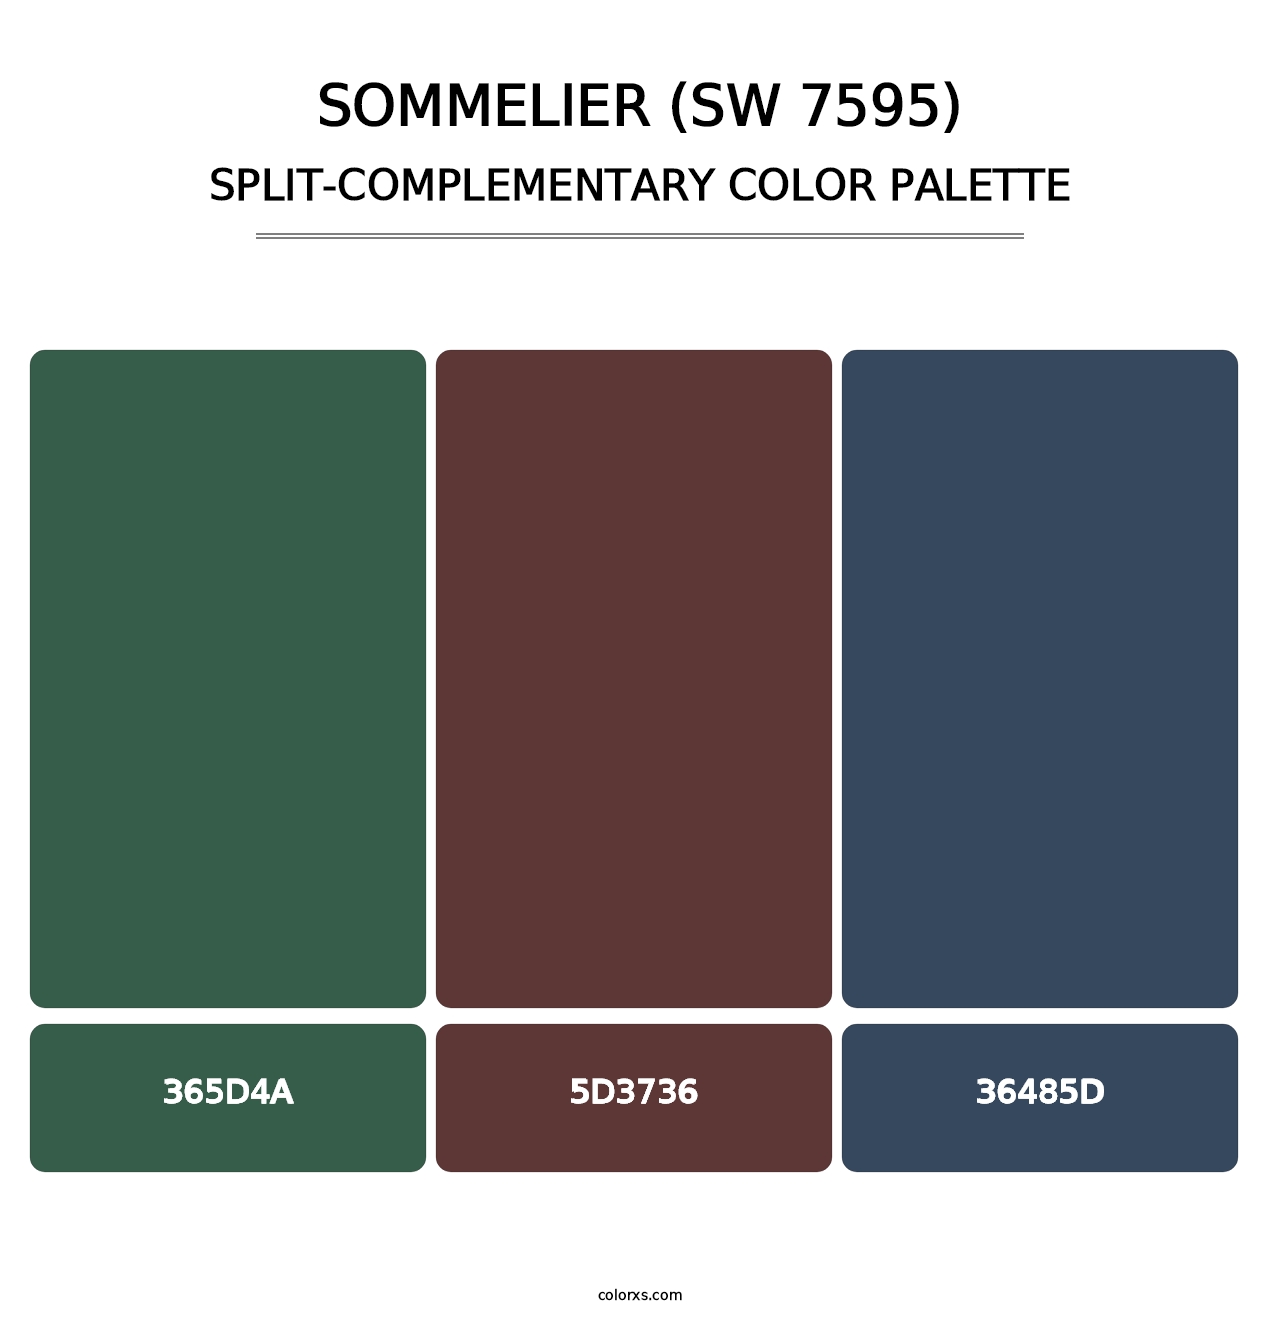 Sommelier (SW 7595) - Split-Complementary Color Palette